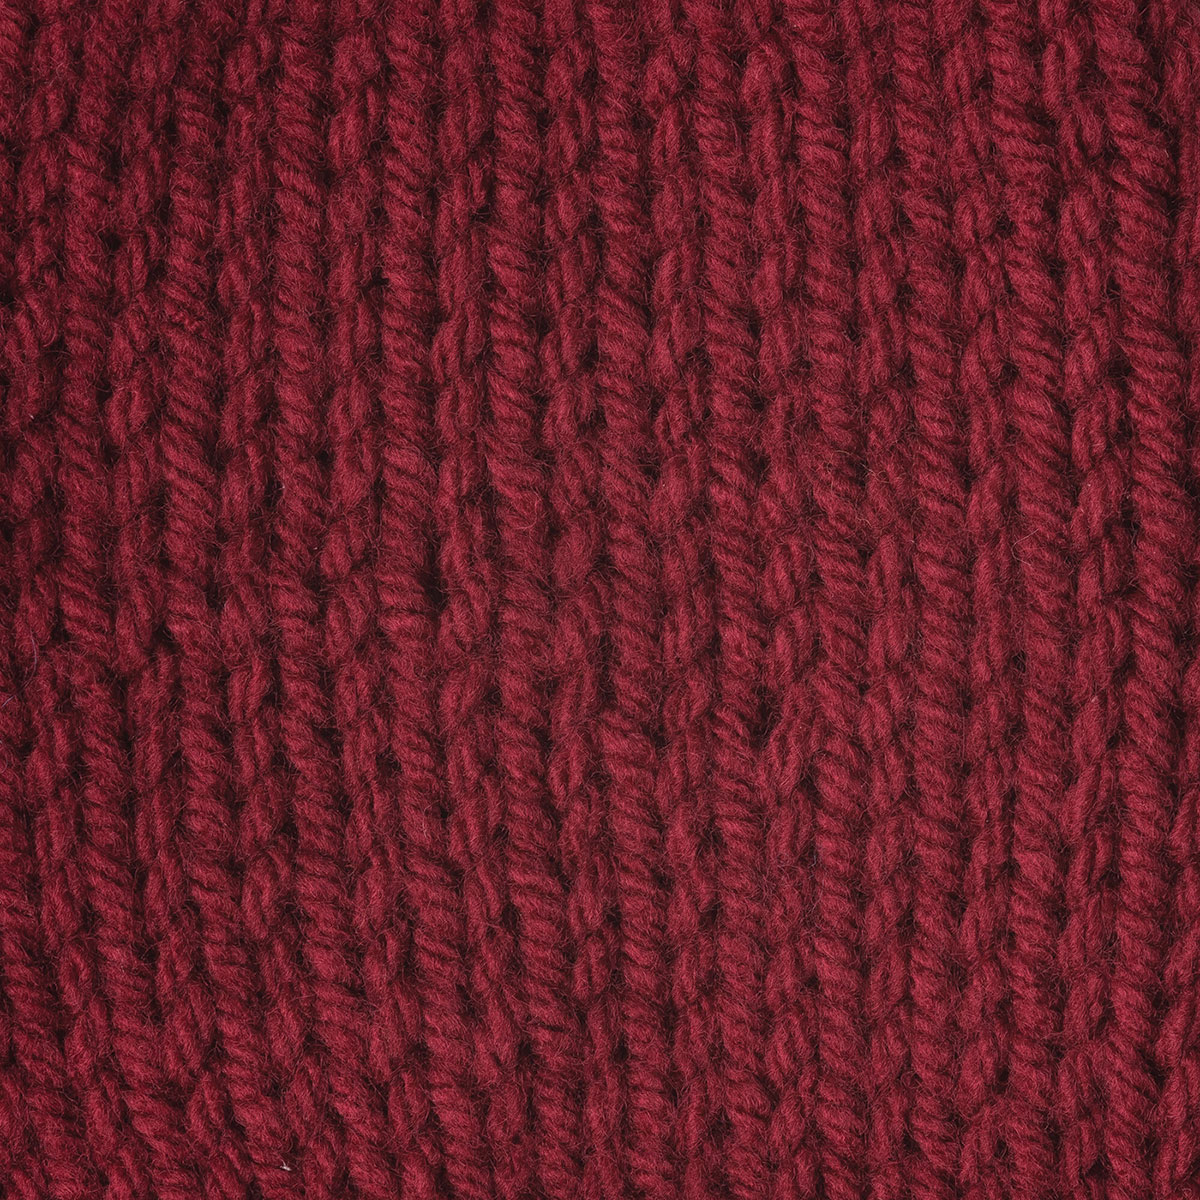 Caron One Pound Acrylic Yarn - 1 lb, 4-Ply, Soft Pink